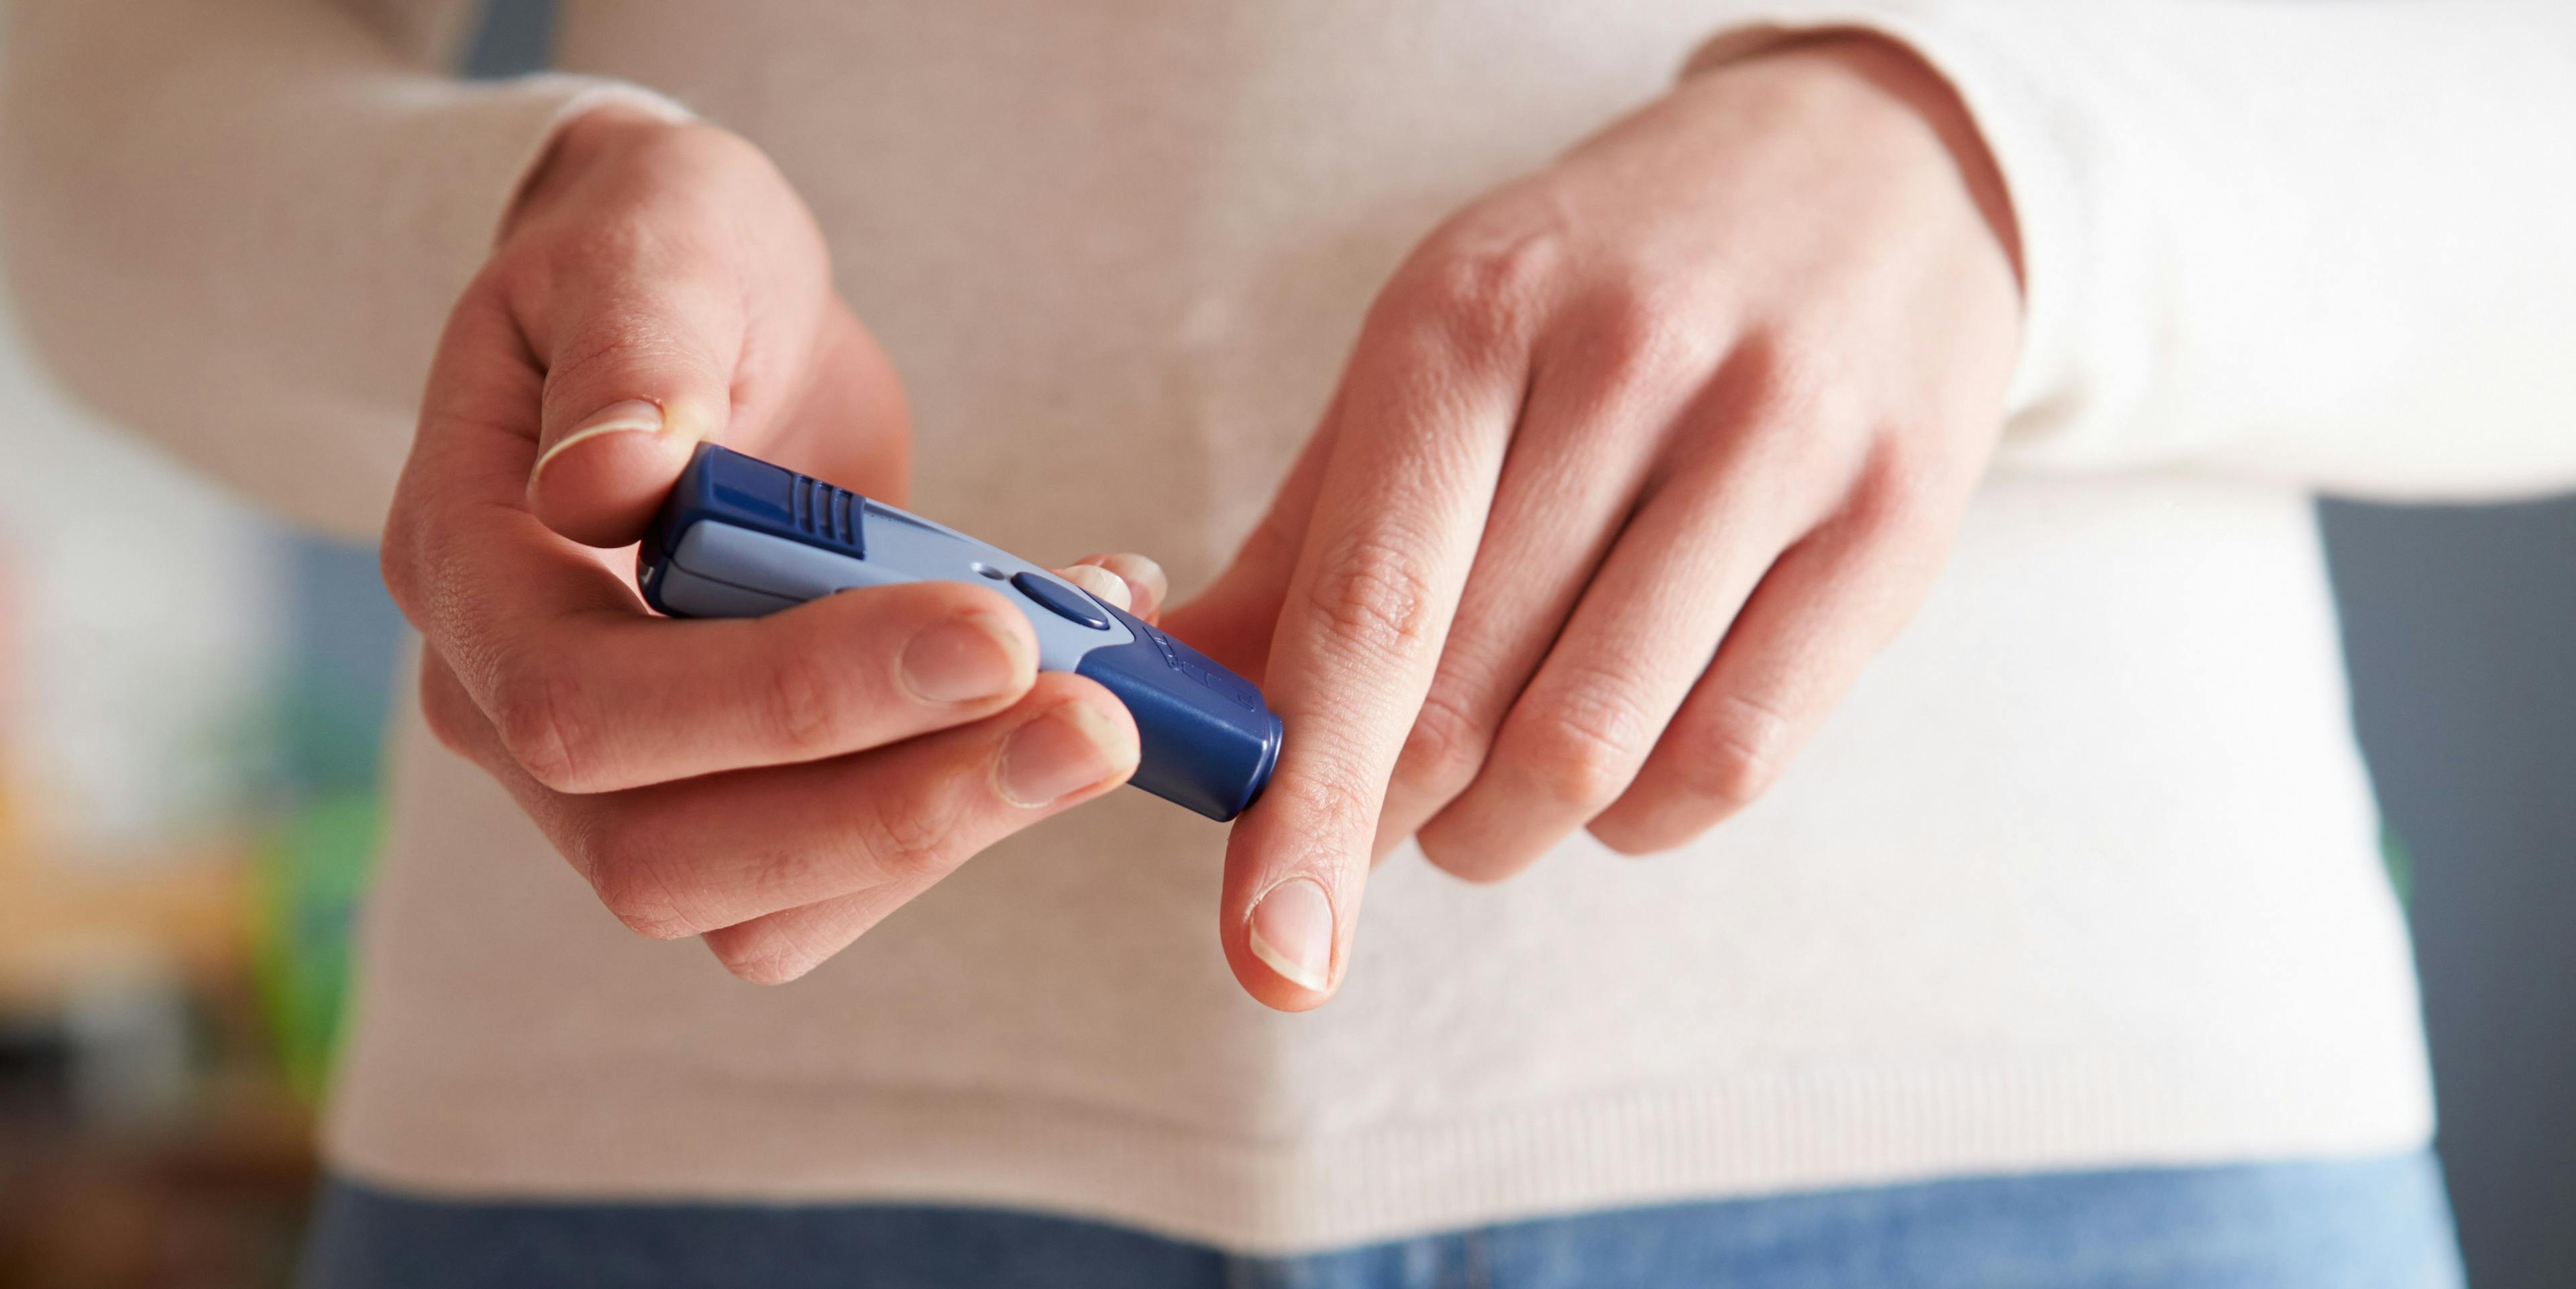 FDA Delays Approval Decision for Sanofi's Insulin Glargine, Lixisenatide Pen for Diabetes